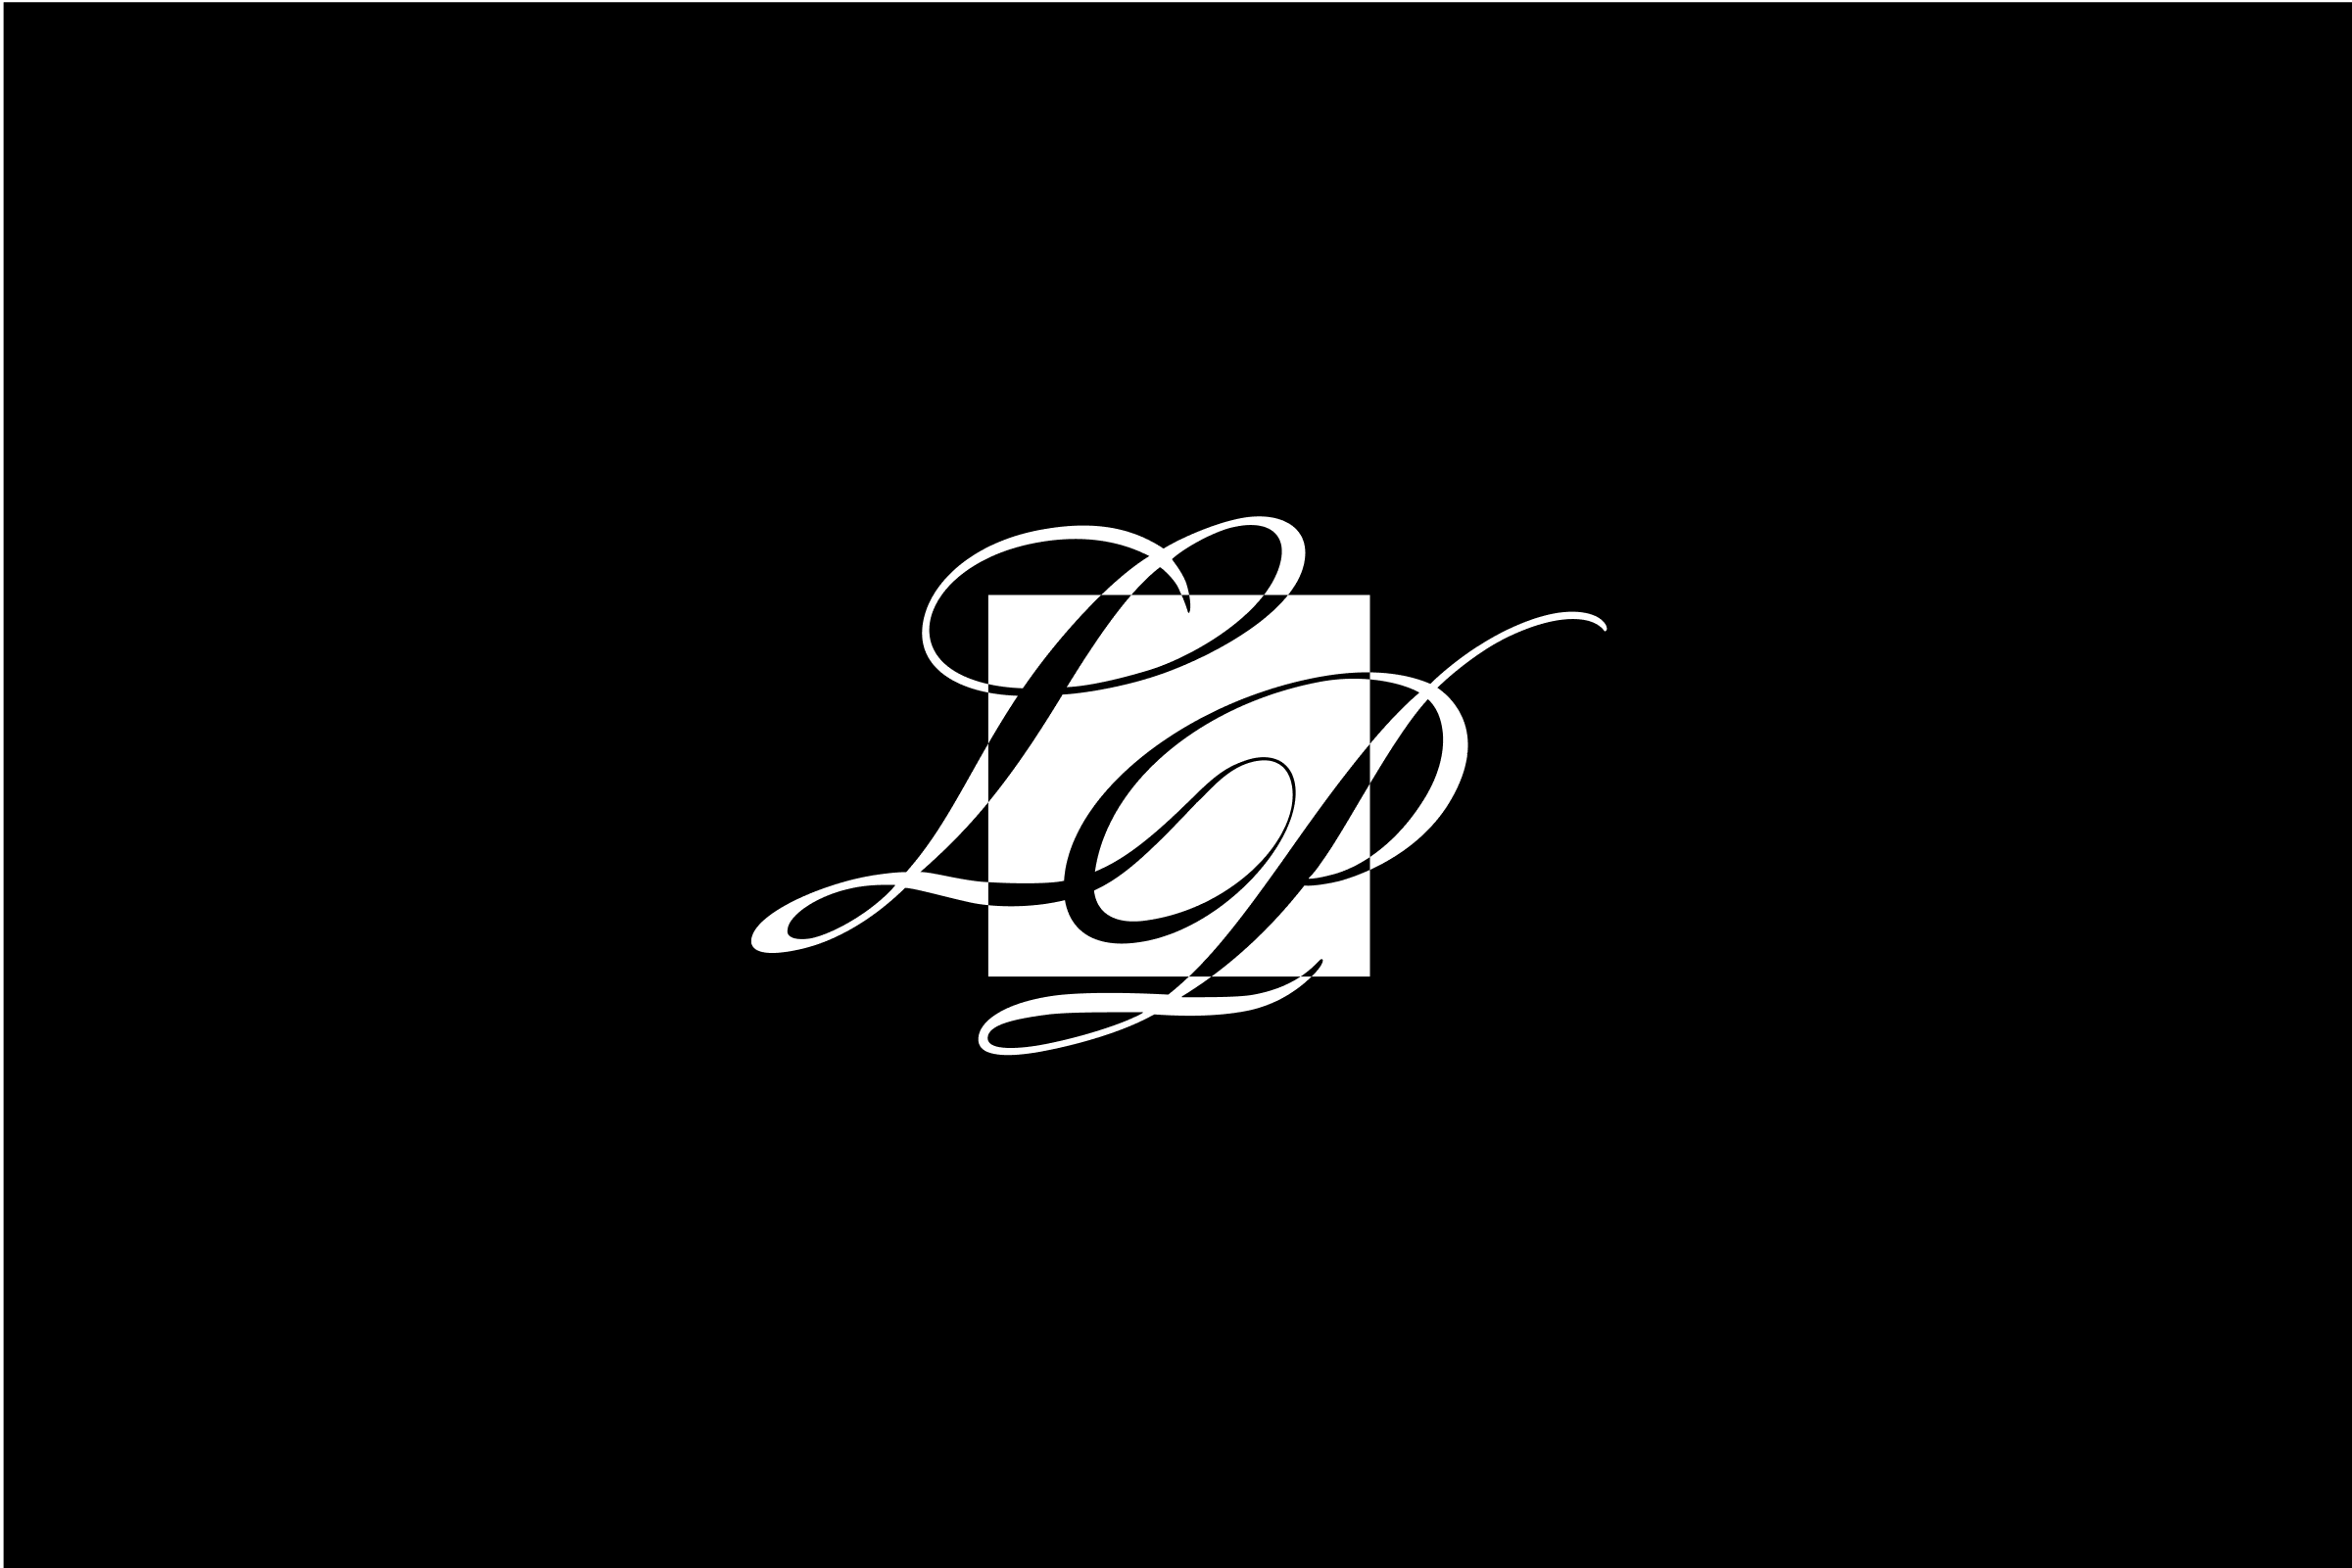 simon-p-coyle-branding-logo-design-2012-lexington-park